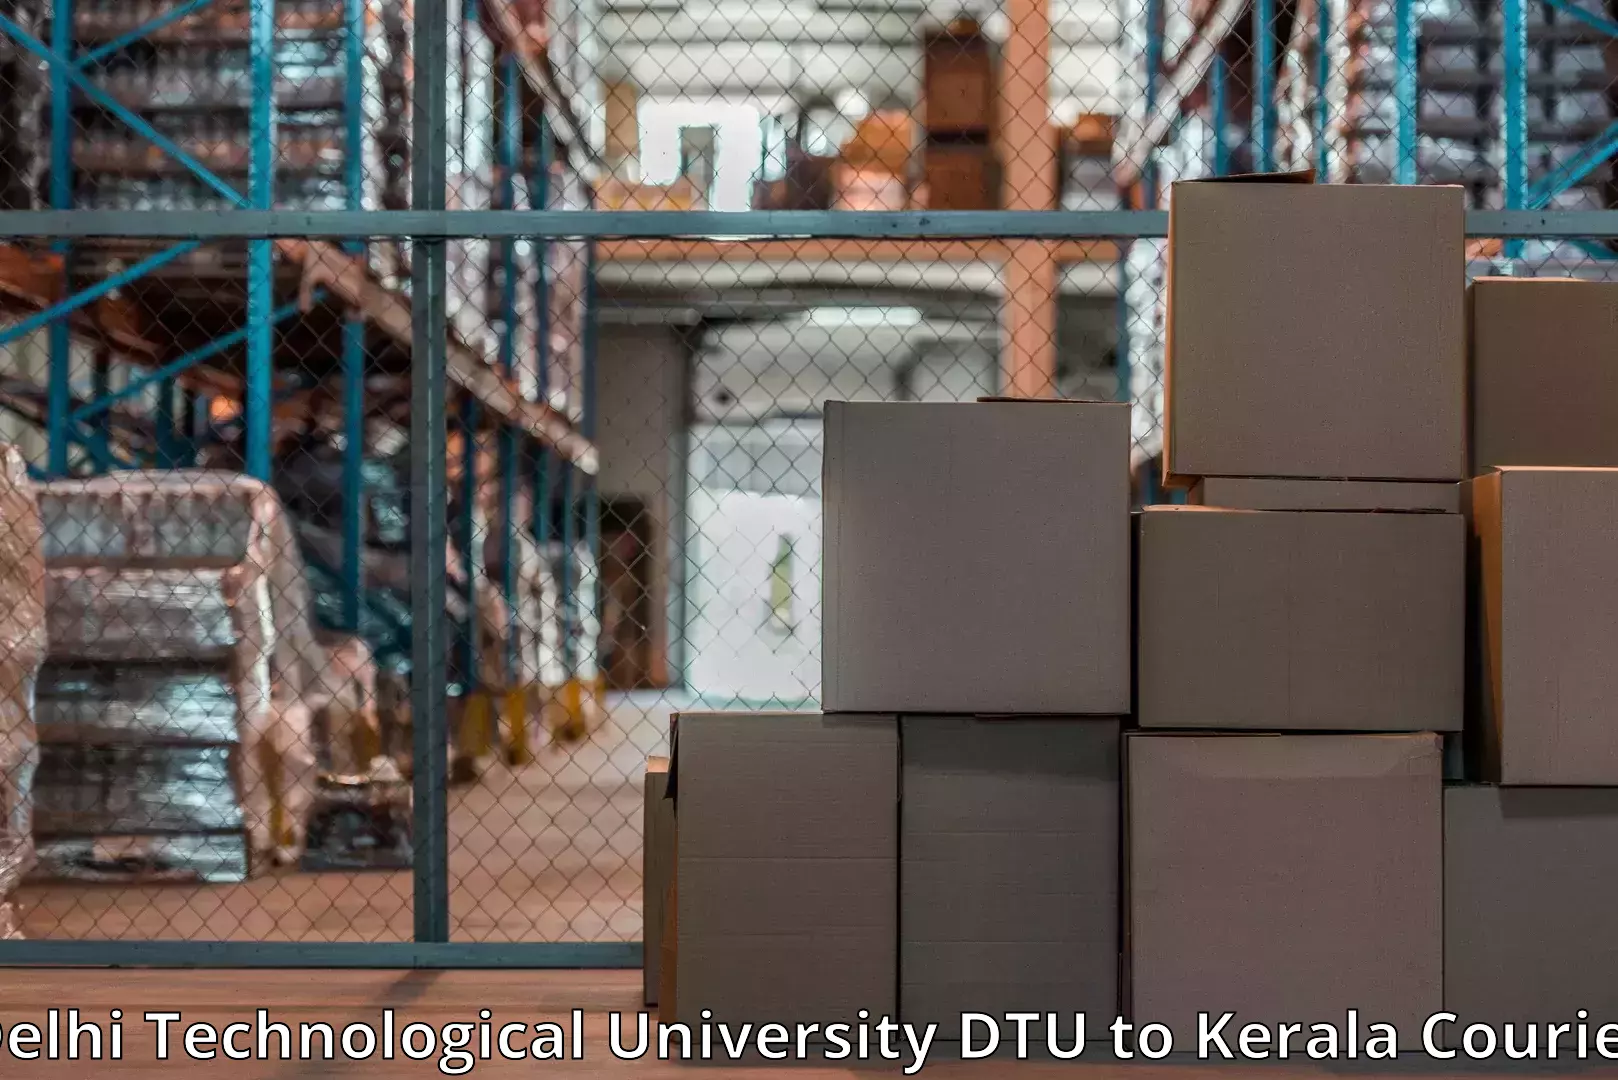 Furniture transport company Delhi Technological University DTU to Parakkadavu